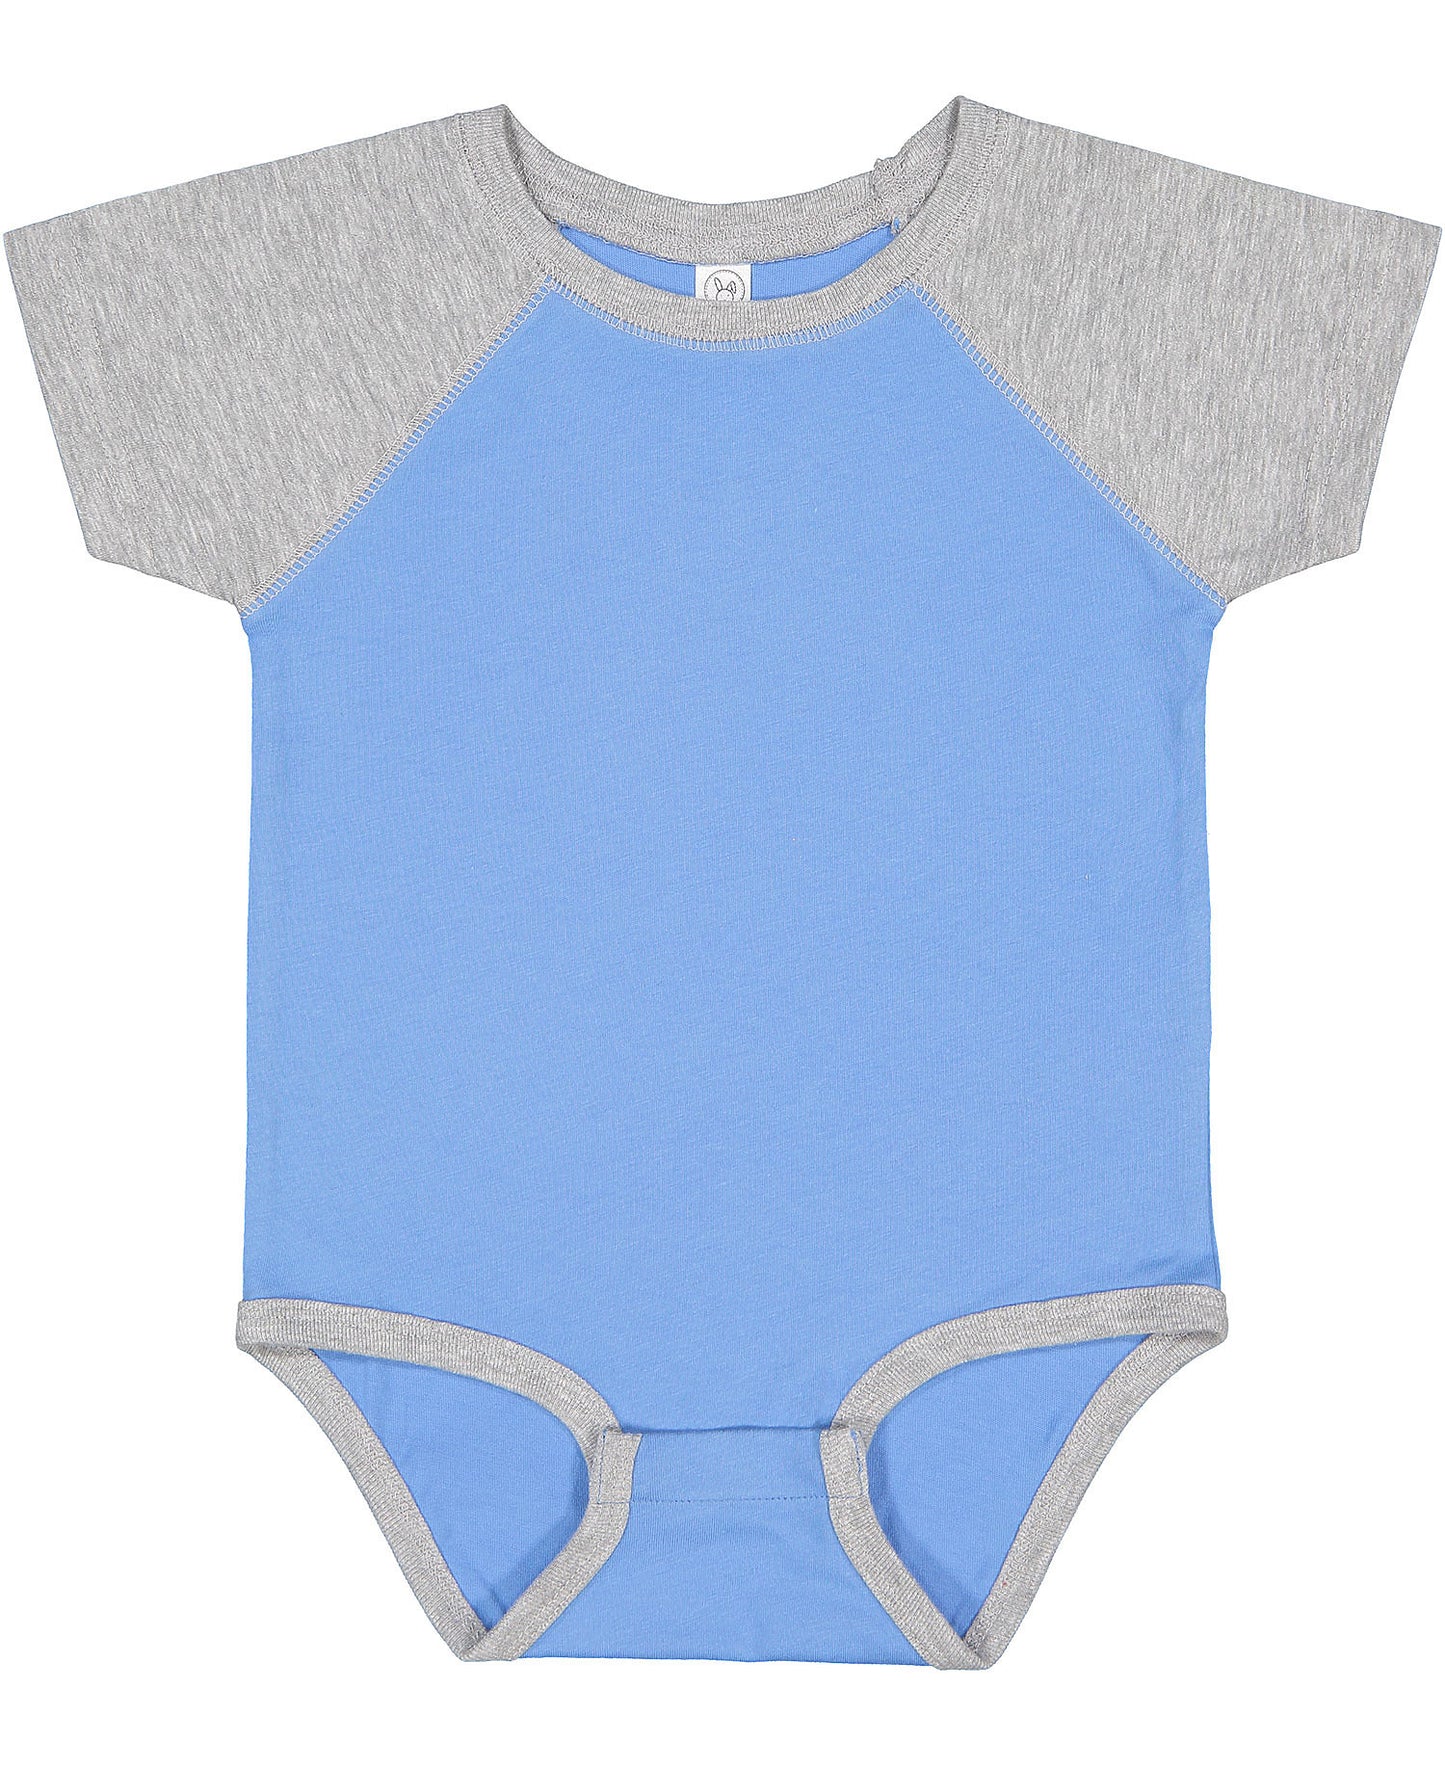 Rabbit Skins Infant Onesie Raglan - Gray Sleeve / Blue Body